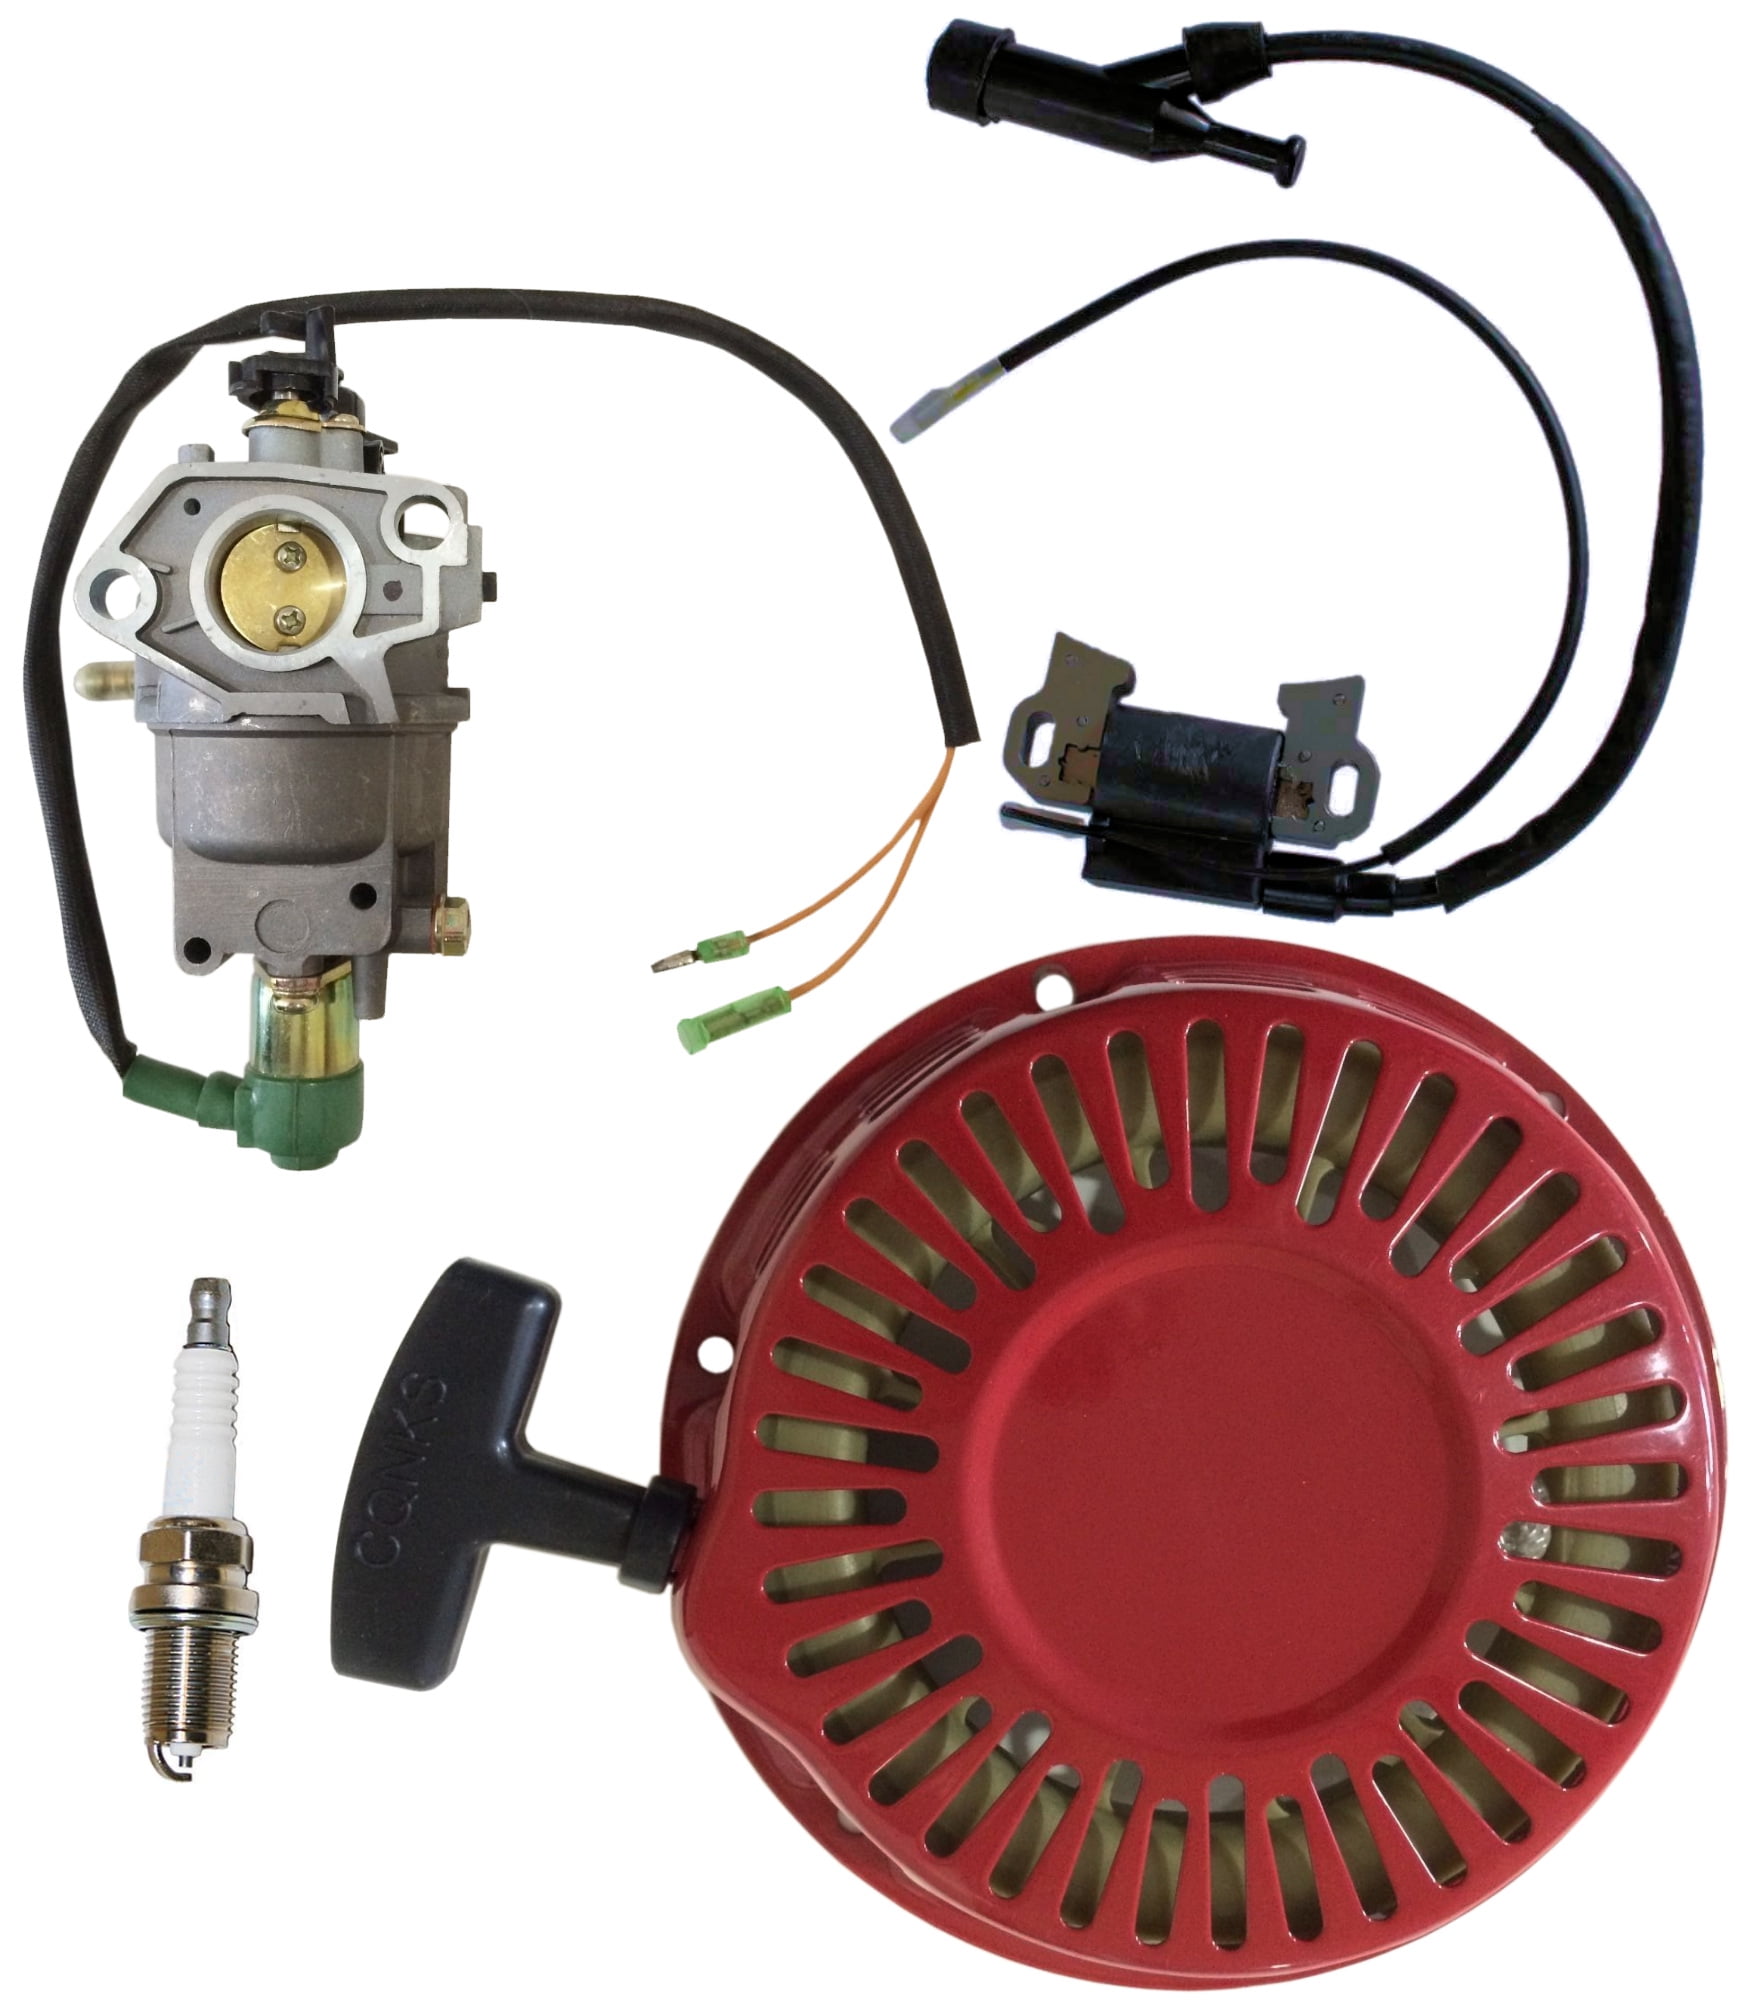 Details about   Recoil Carburetor Air Filter Ignition Coil Spark Plug Kit For Honda GX270 GX240 